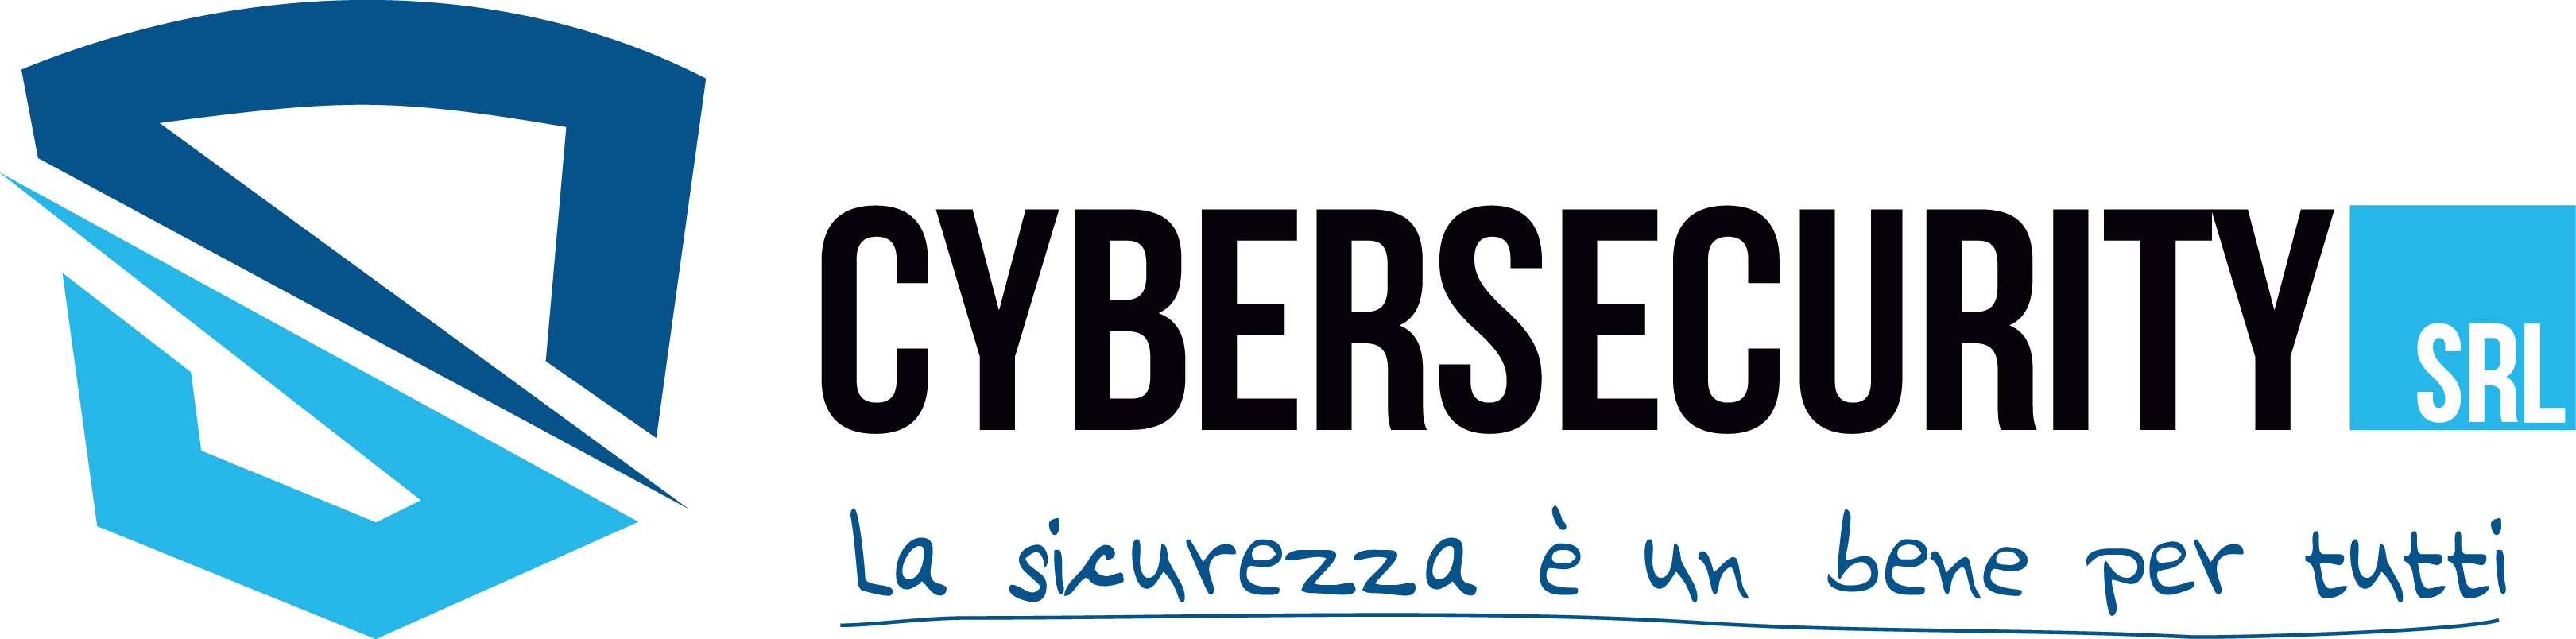 CyberSecurity S.r.l.